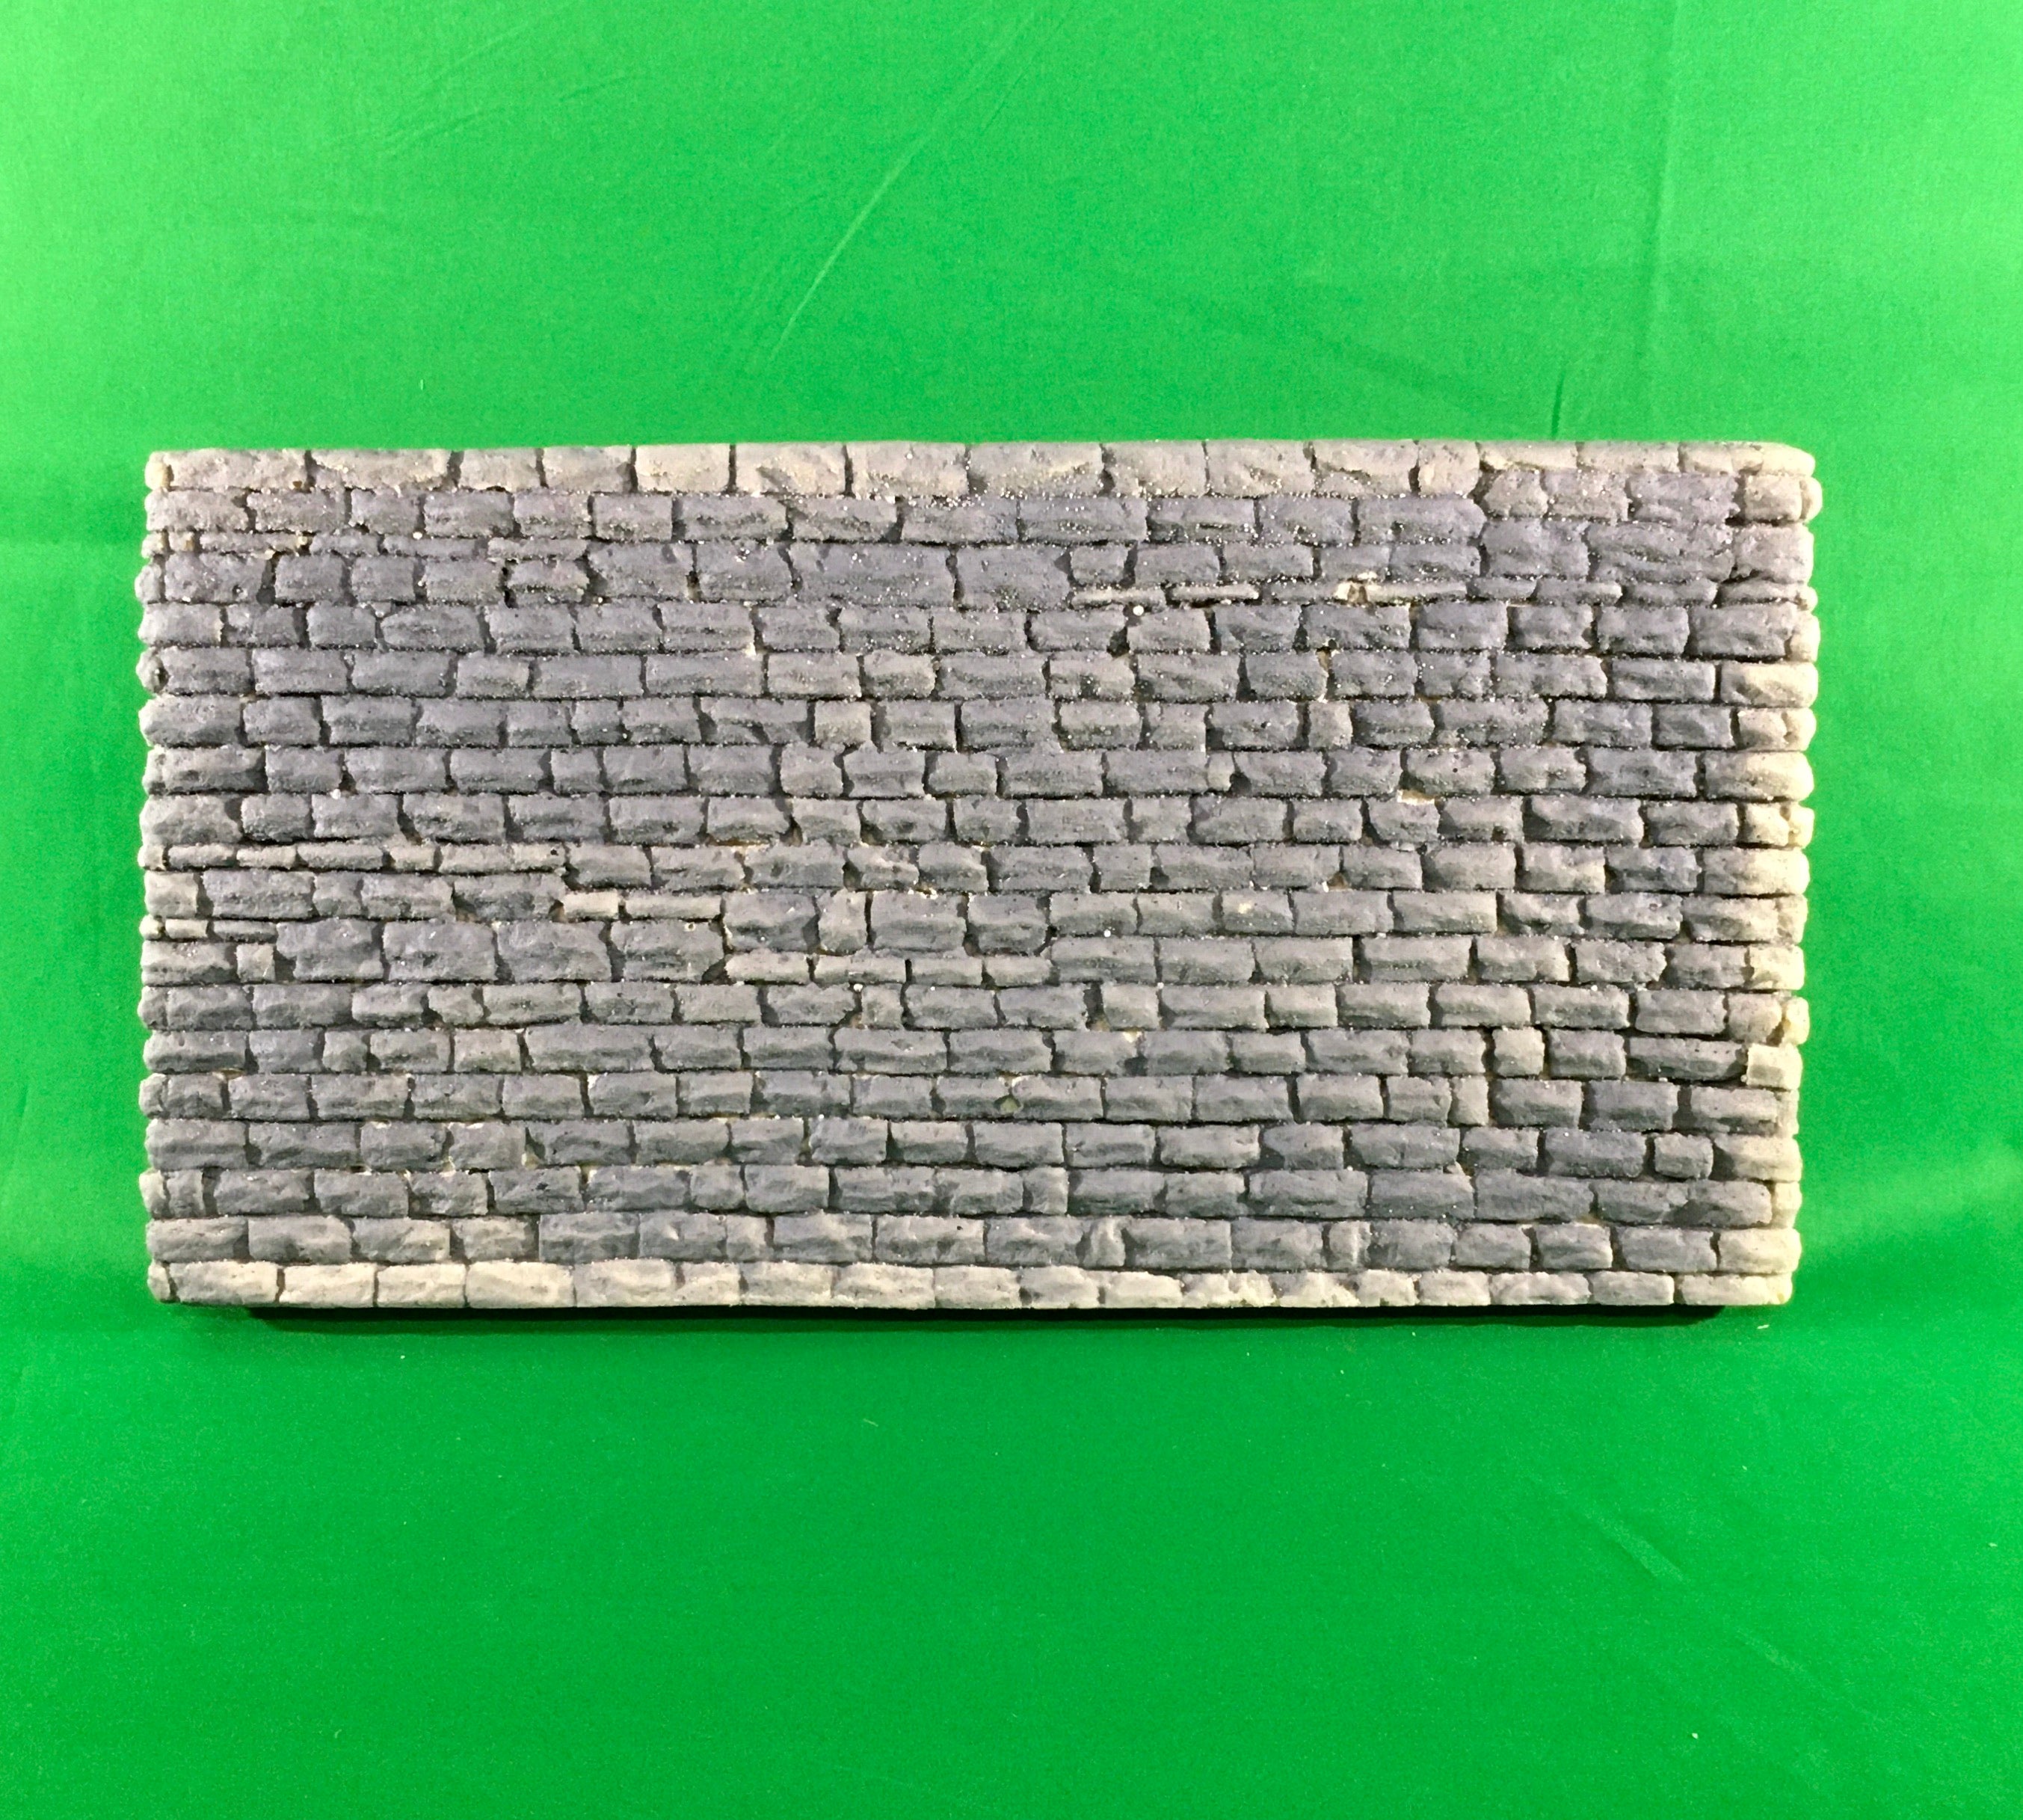 Atherton Scenics 6140 - "Thick" Profile Cut Block Wall